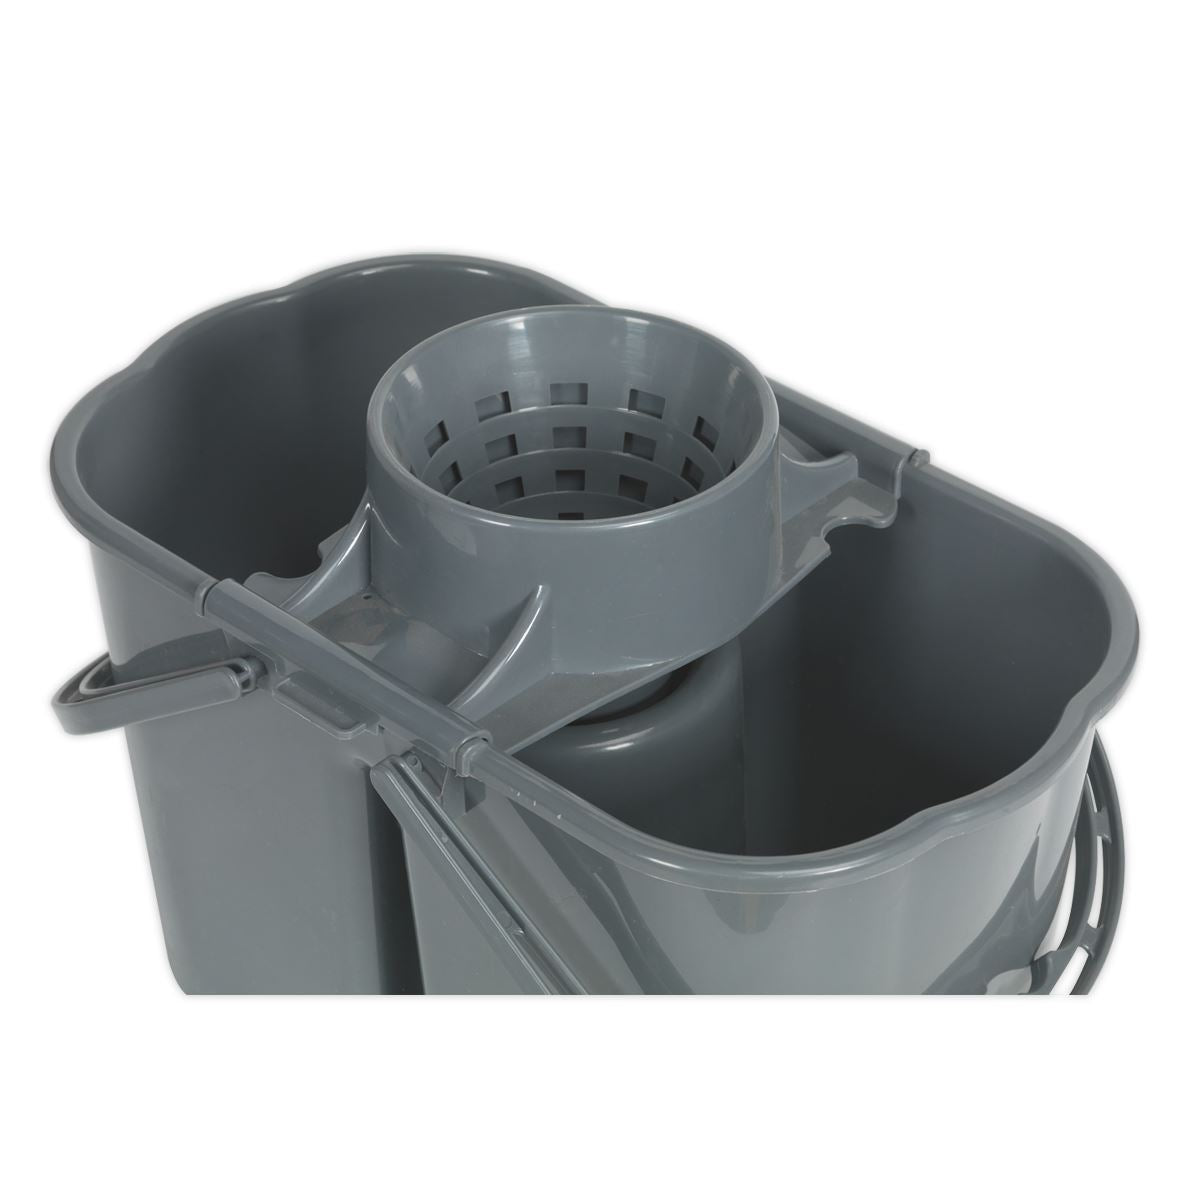 Sealey Mop Bucket 15L - 2 Compartment